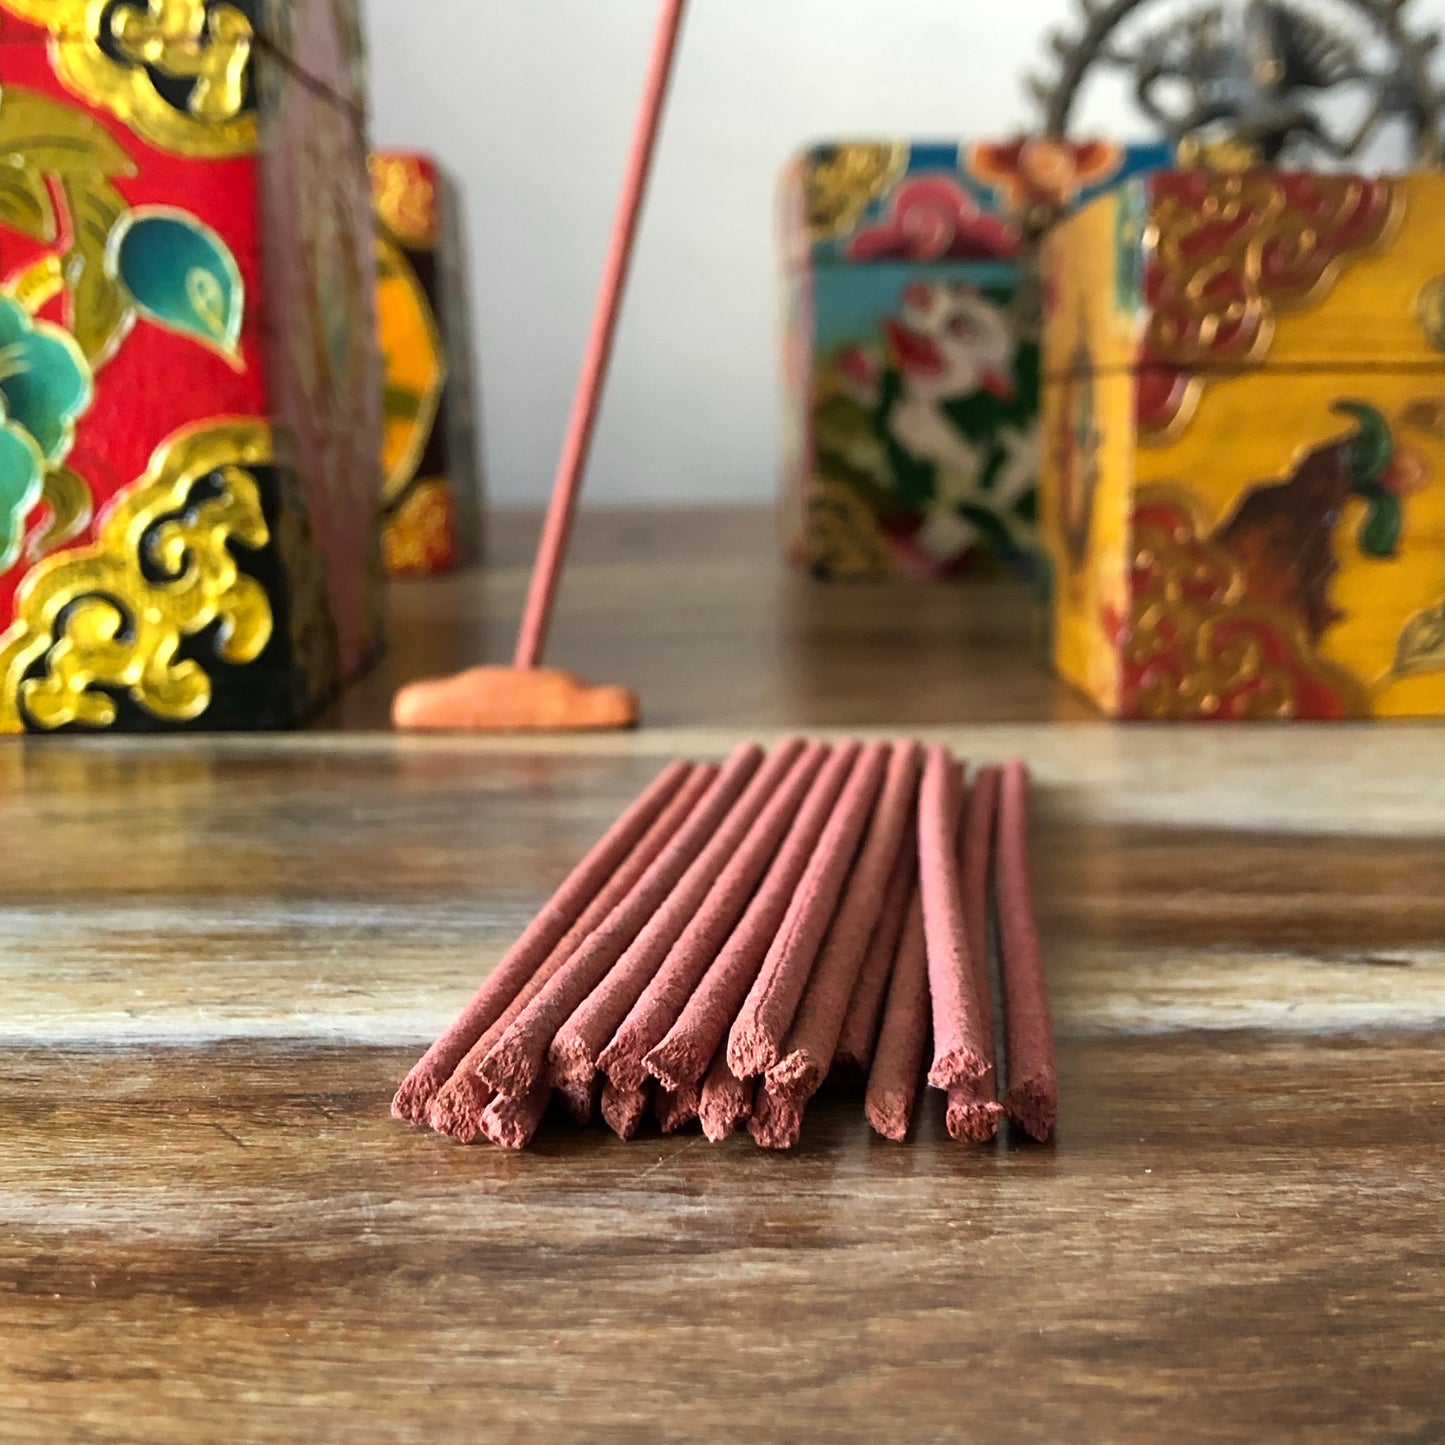 Gangchen Himalayan incense Padmasambhava Wish Fulfilling